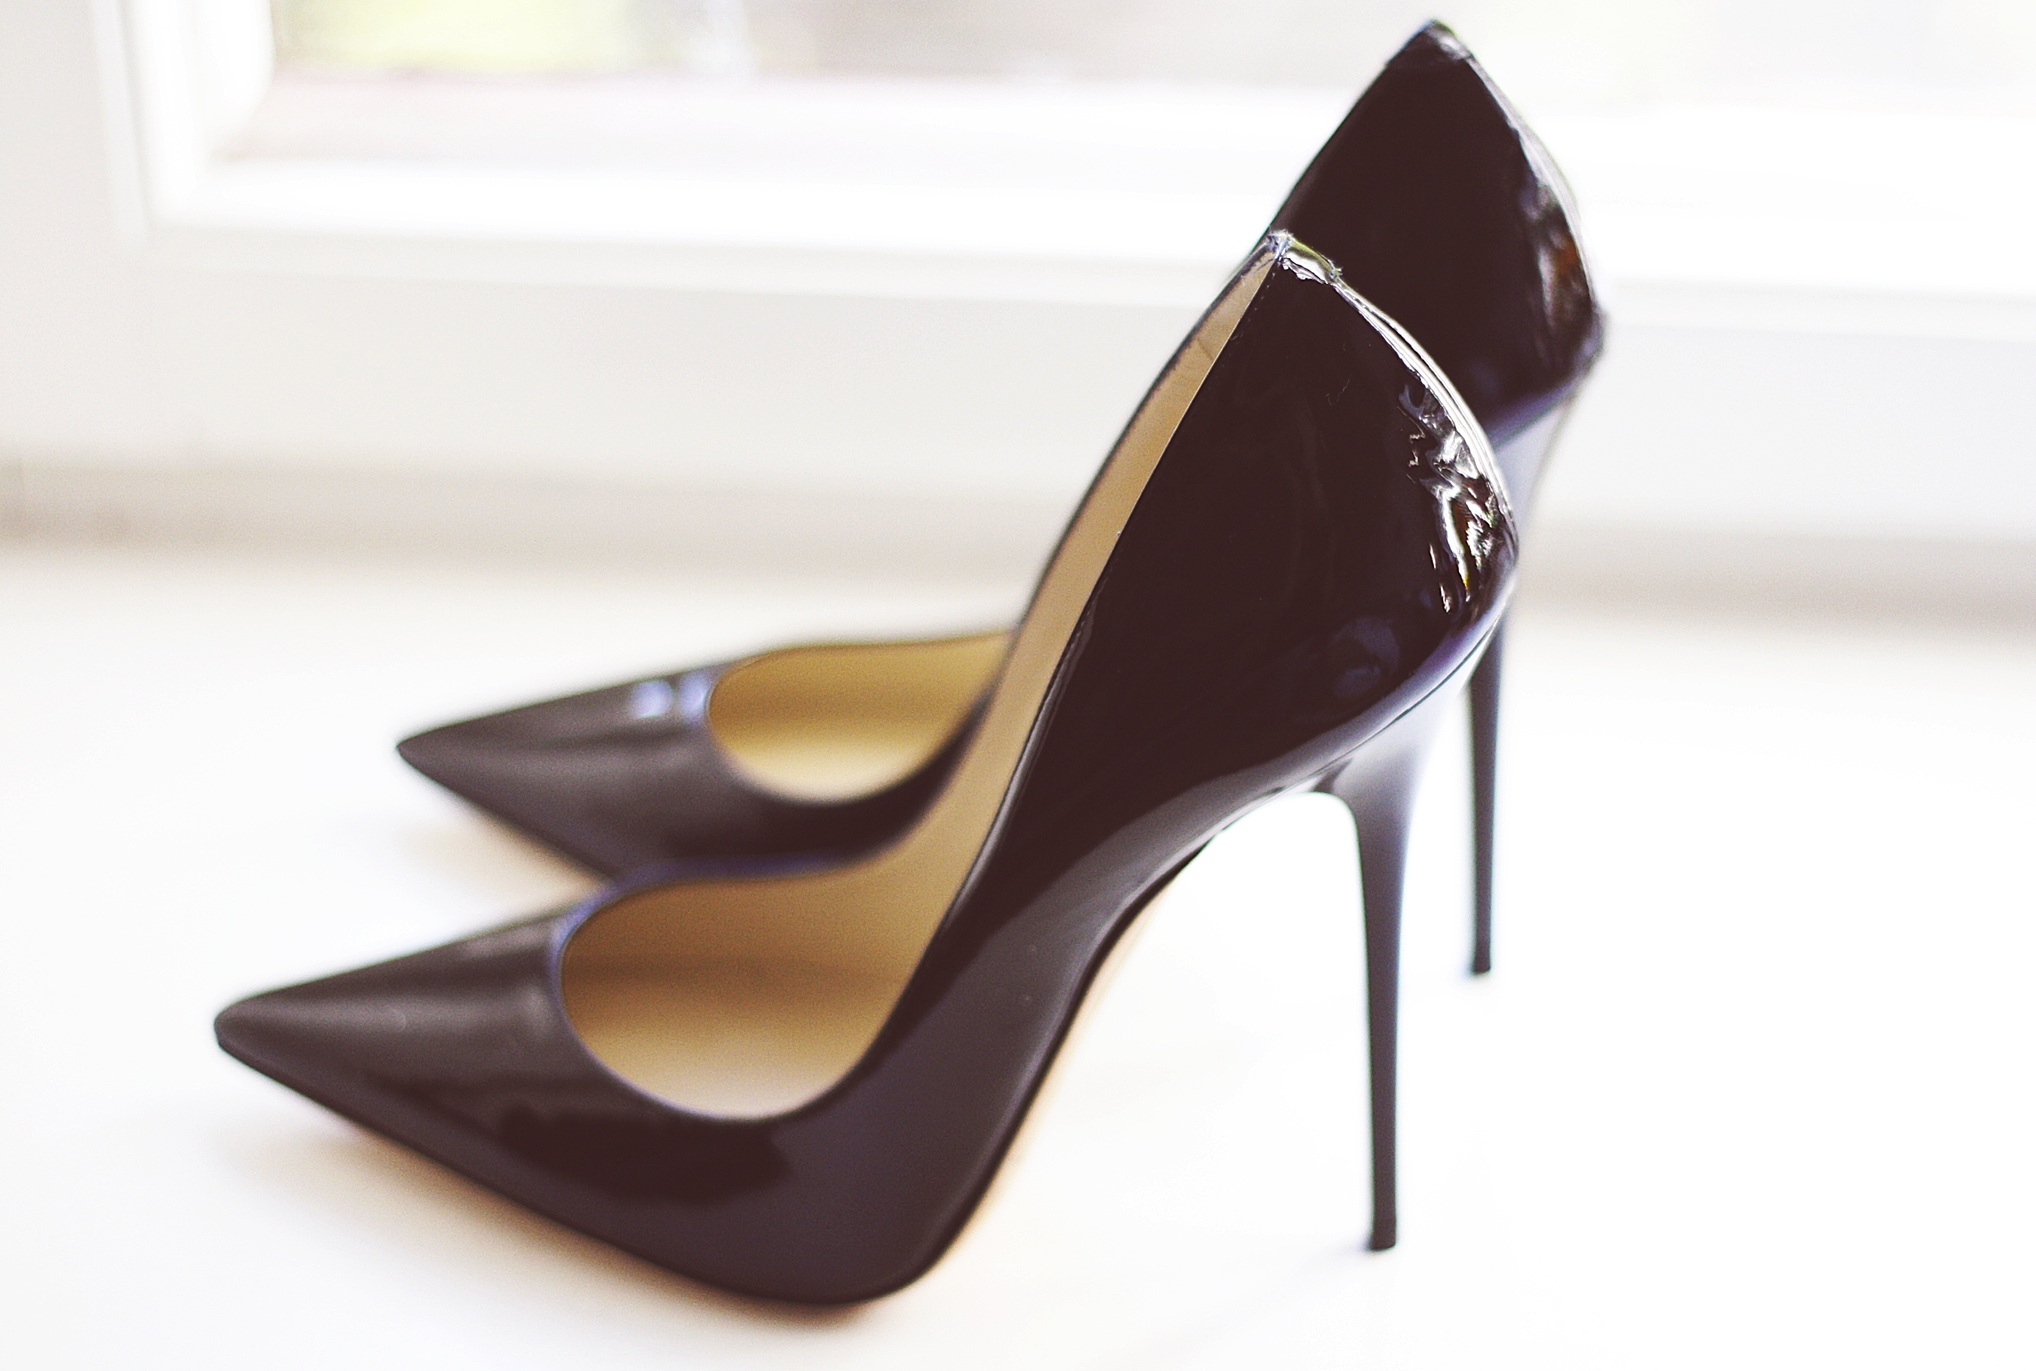 The perfect heels - Angelica Blick